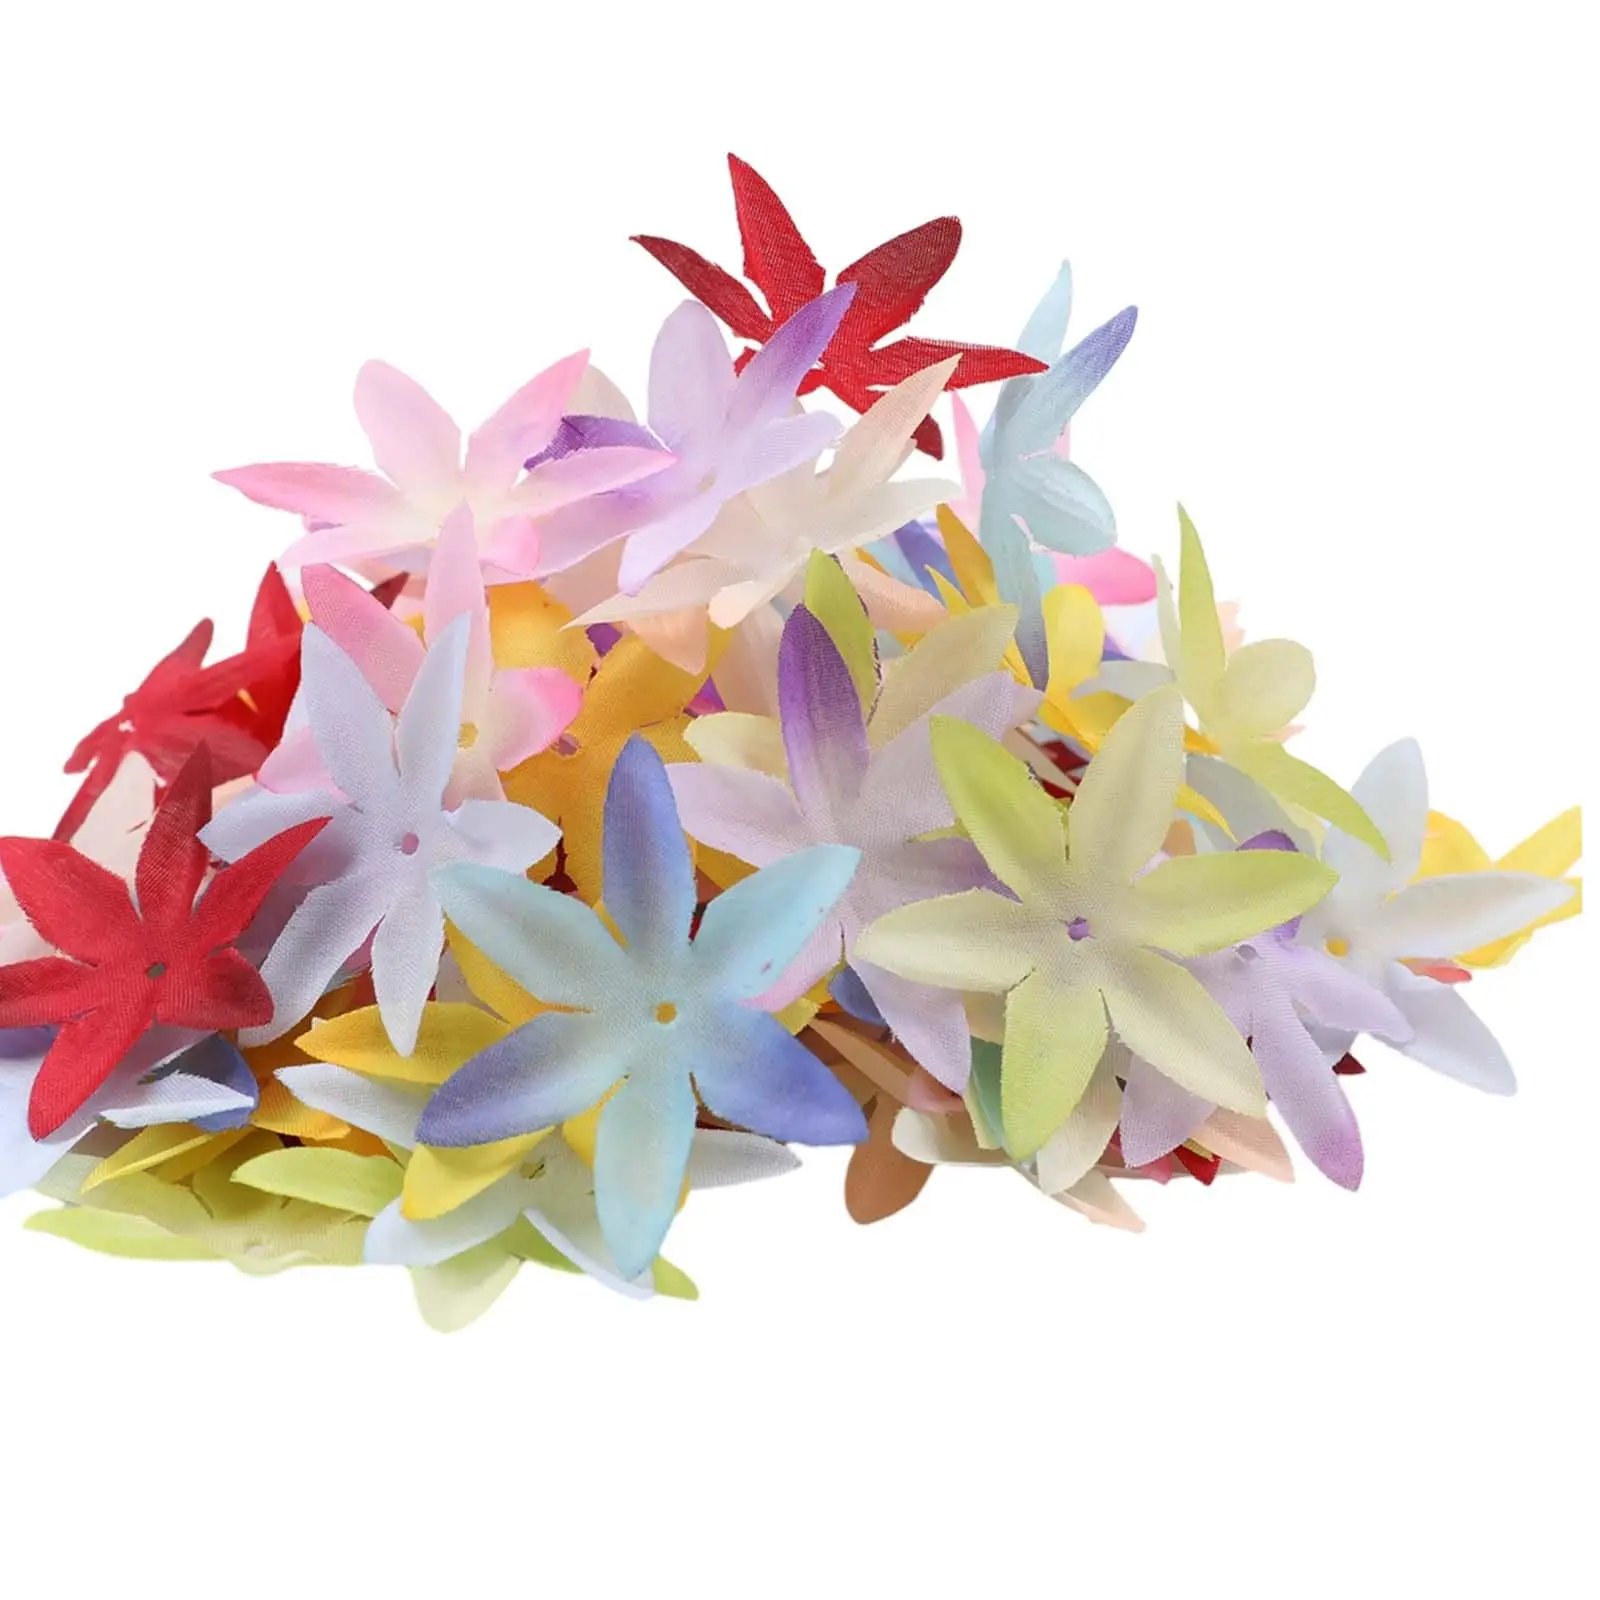 500 Pieces Artificial Silk Flower Petals Fake Petal DIY Craft Making Scatter Petals for Home Wreath Scrapbooking Dinner Table